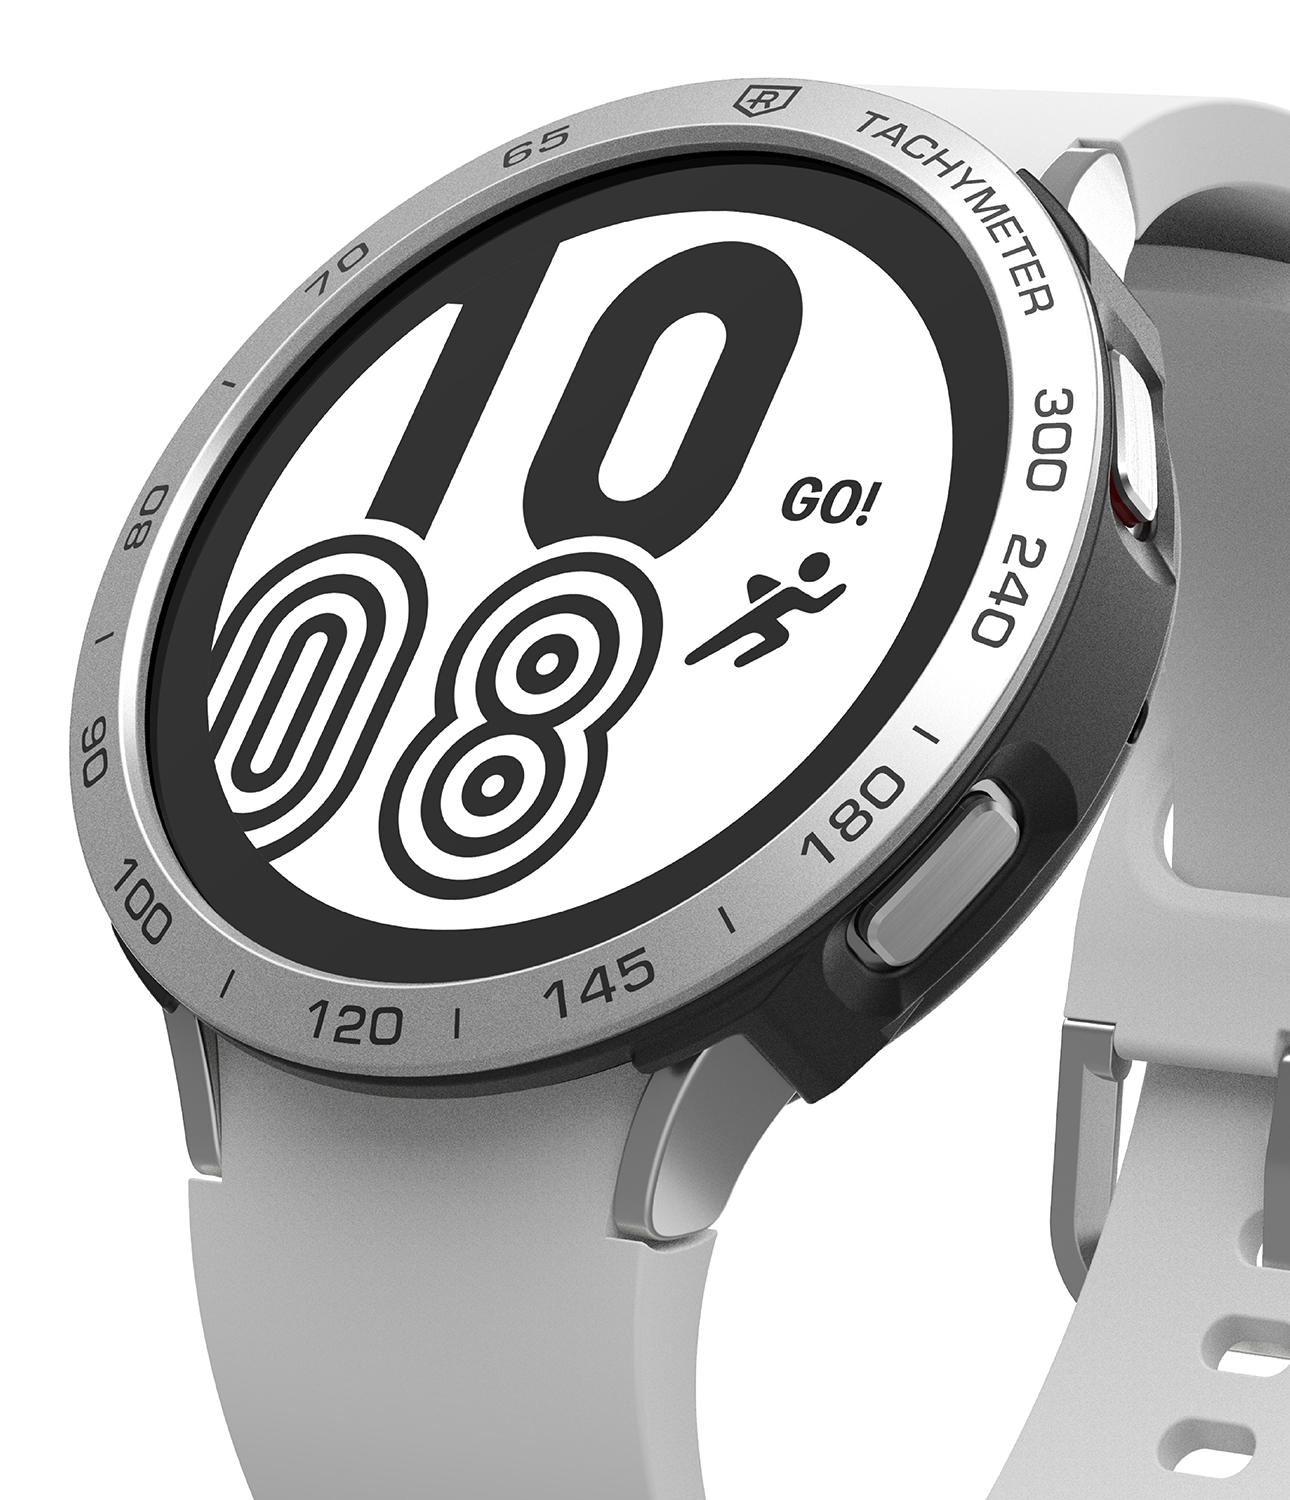 اطار ساعة سامسونج 40 ملم - أسود و رمادي Ringke [Air Sports + Bezel Styling] Case Galaxy Watch 4